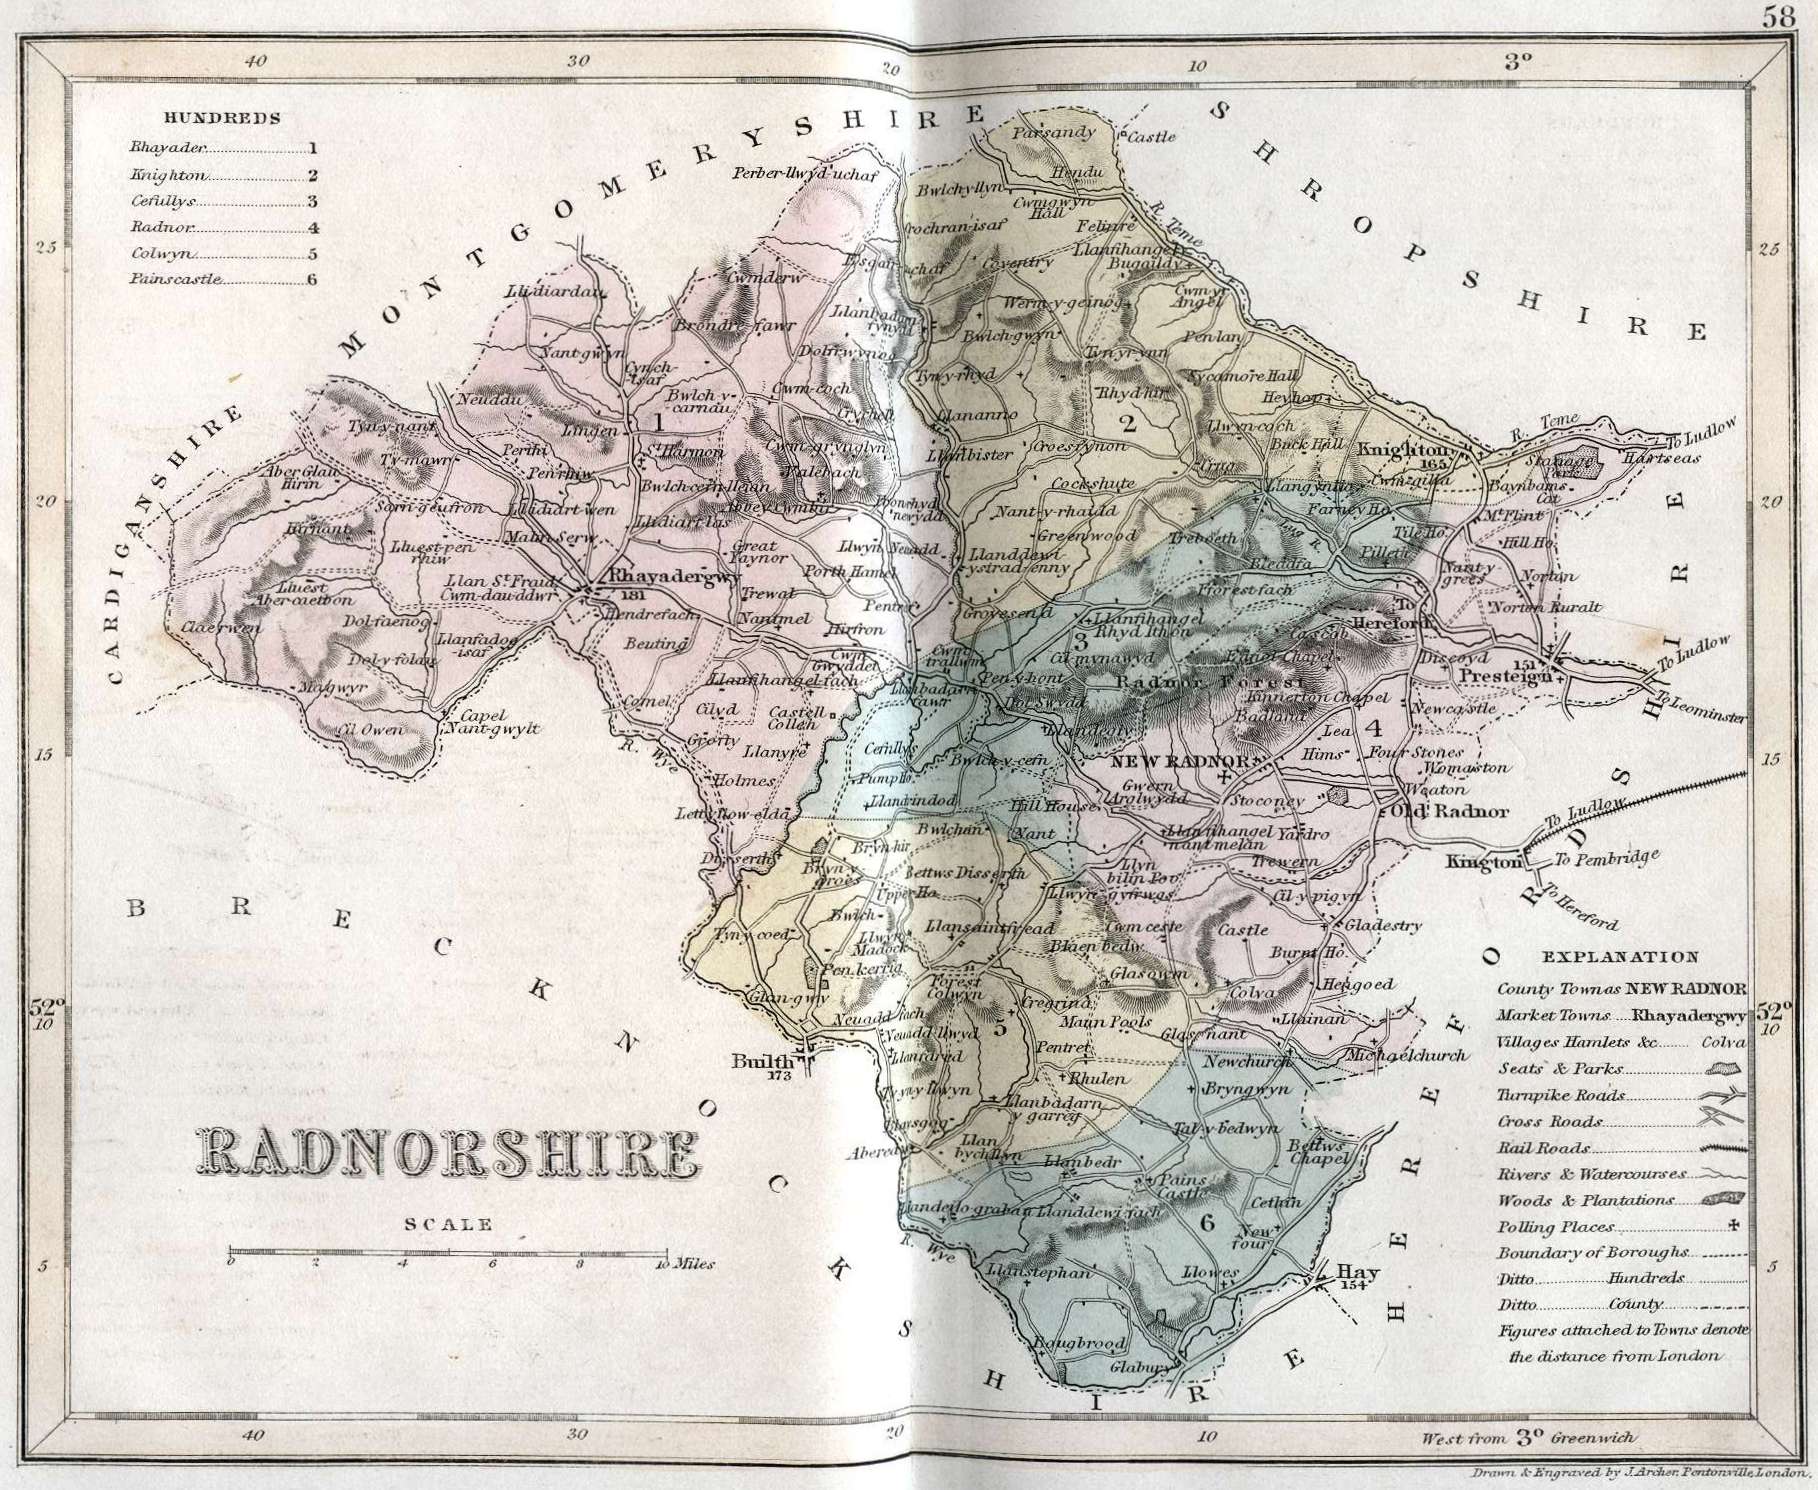 Radnorshire (440 K)